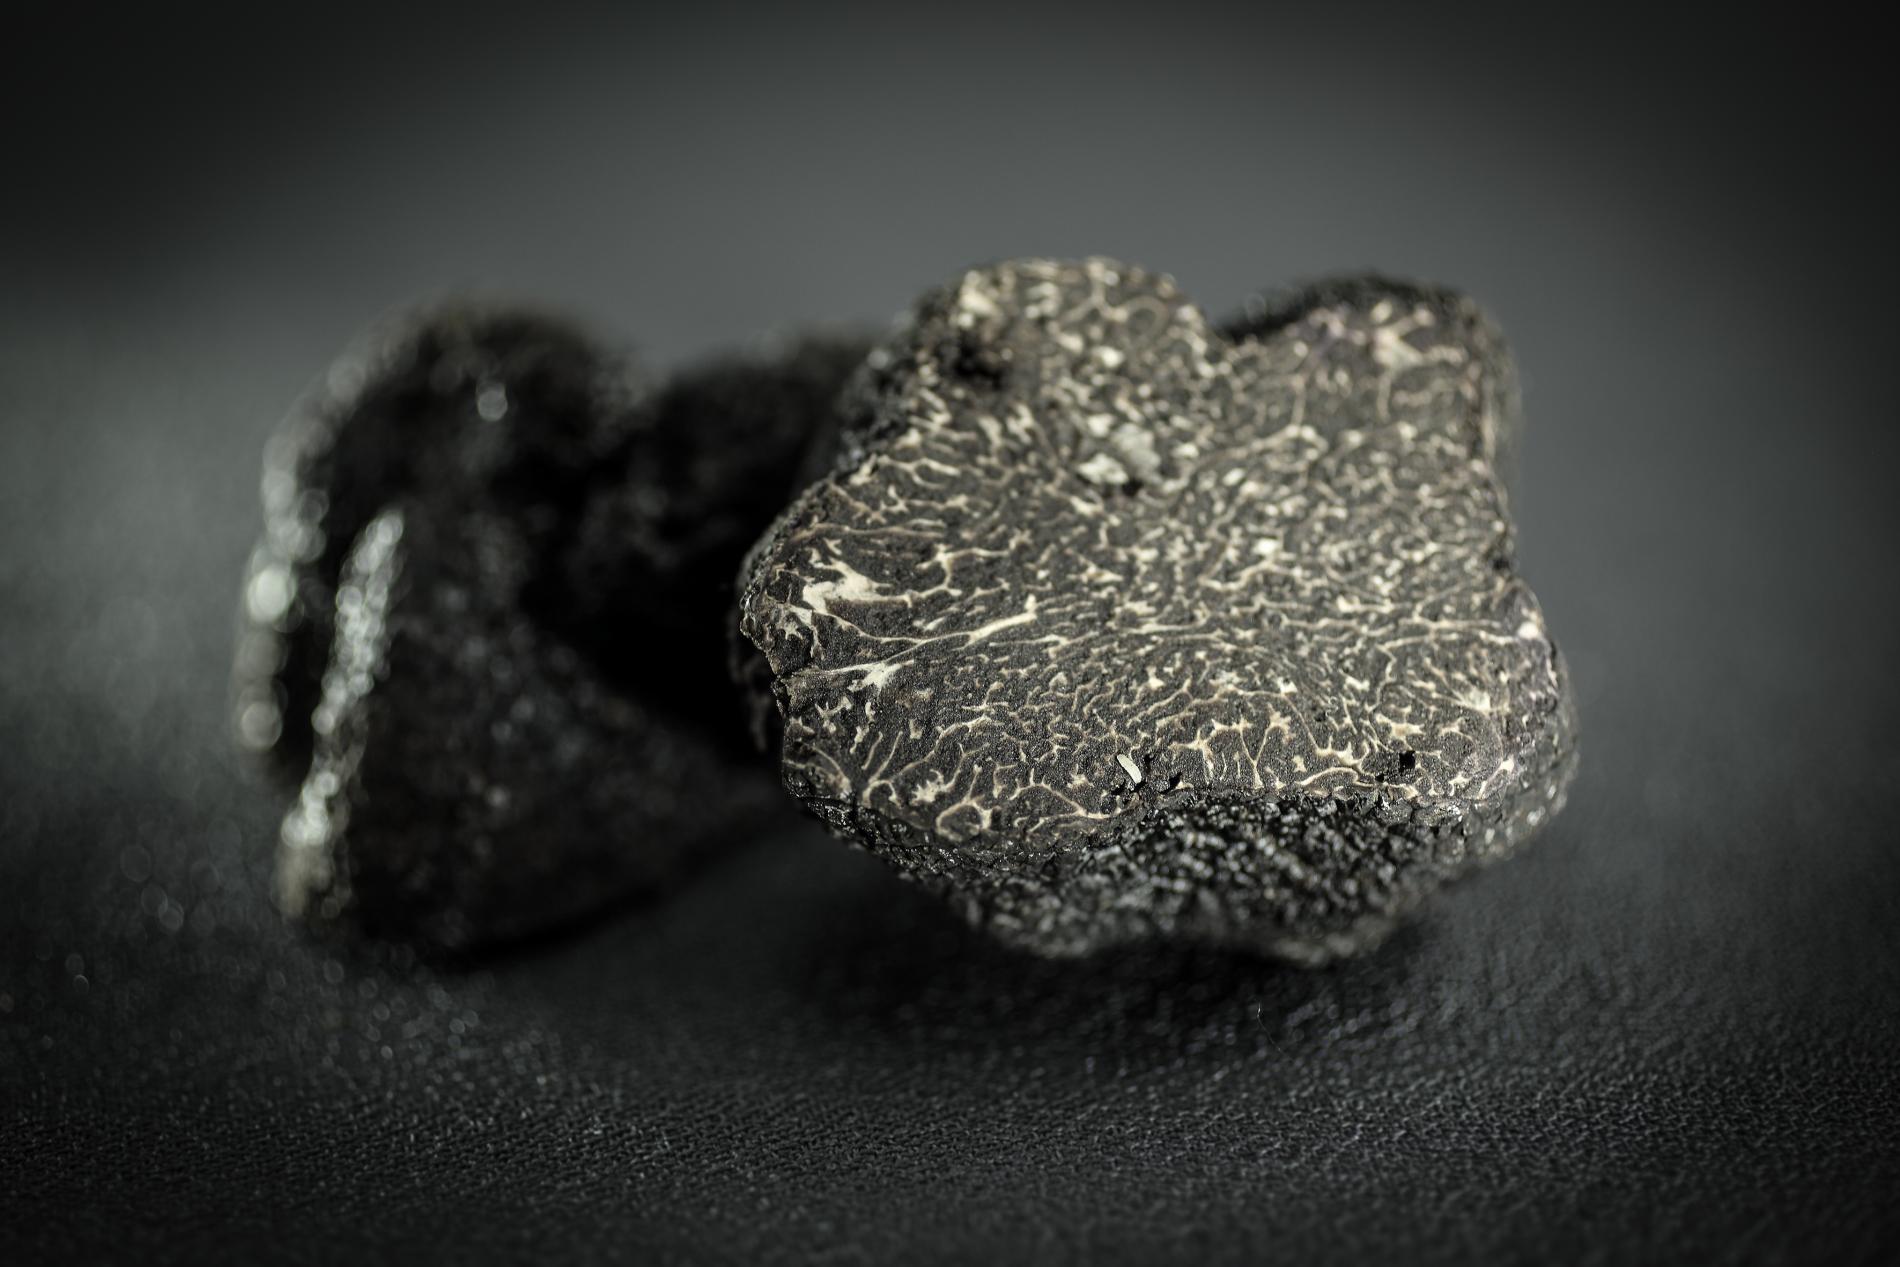 Perigord, country of the black truffle